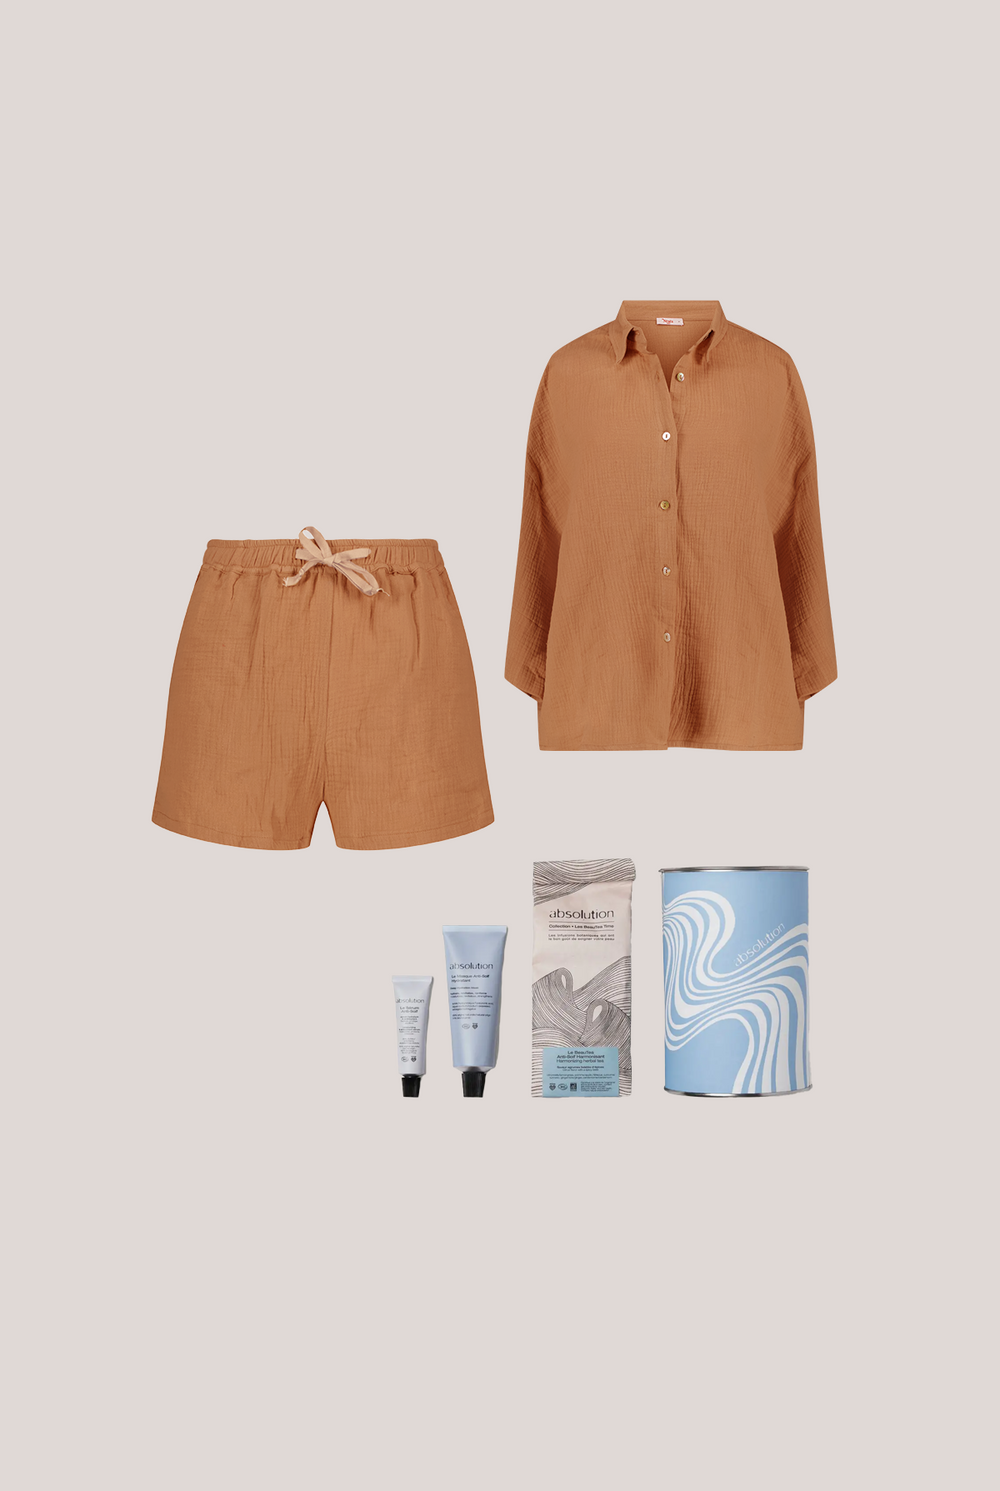 Cocooning Box - Marra Caramel Pajamas + Absolution Kit 